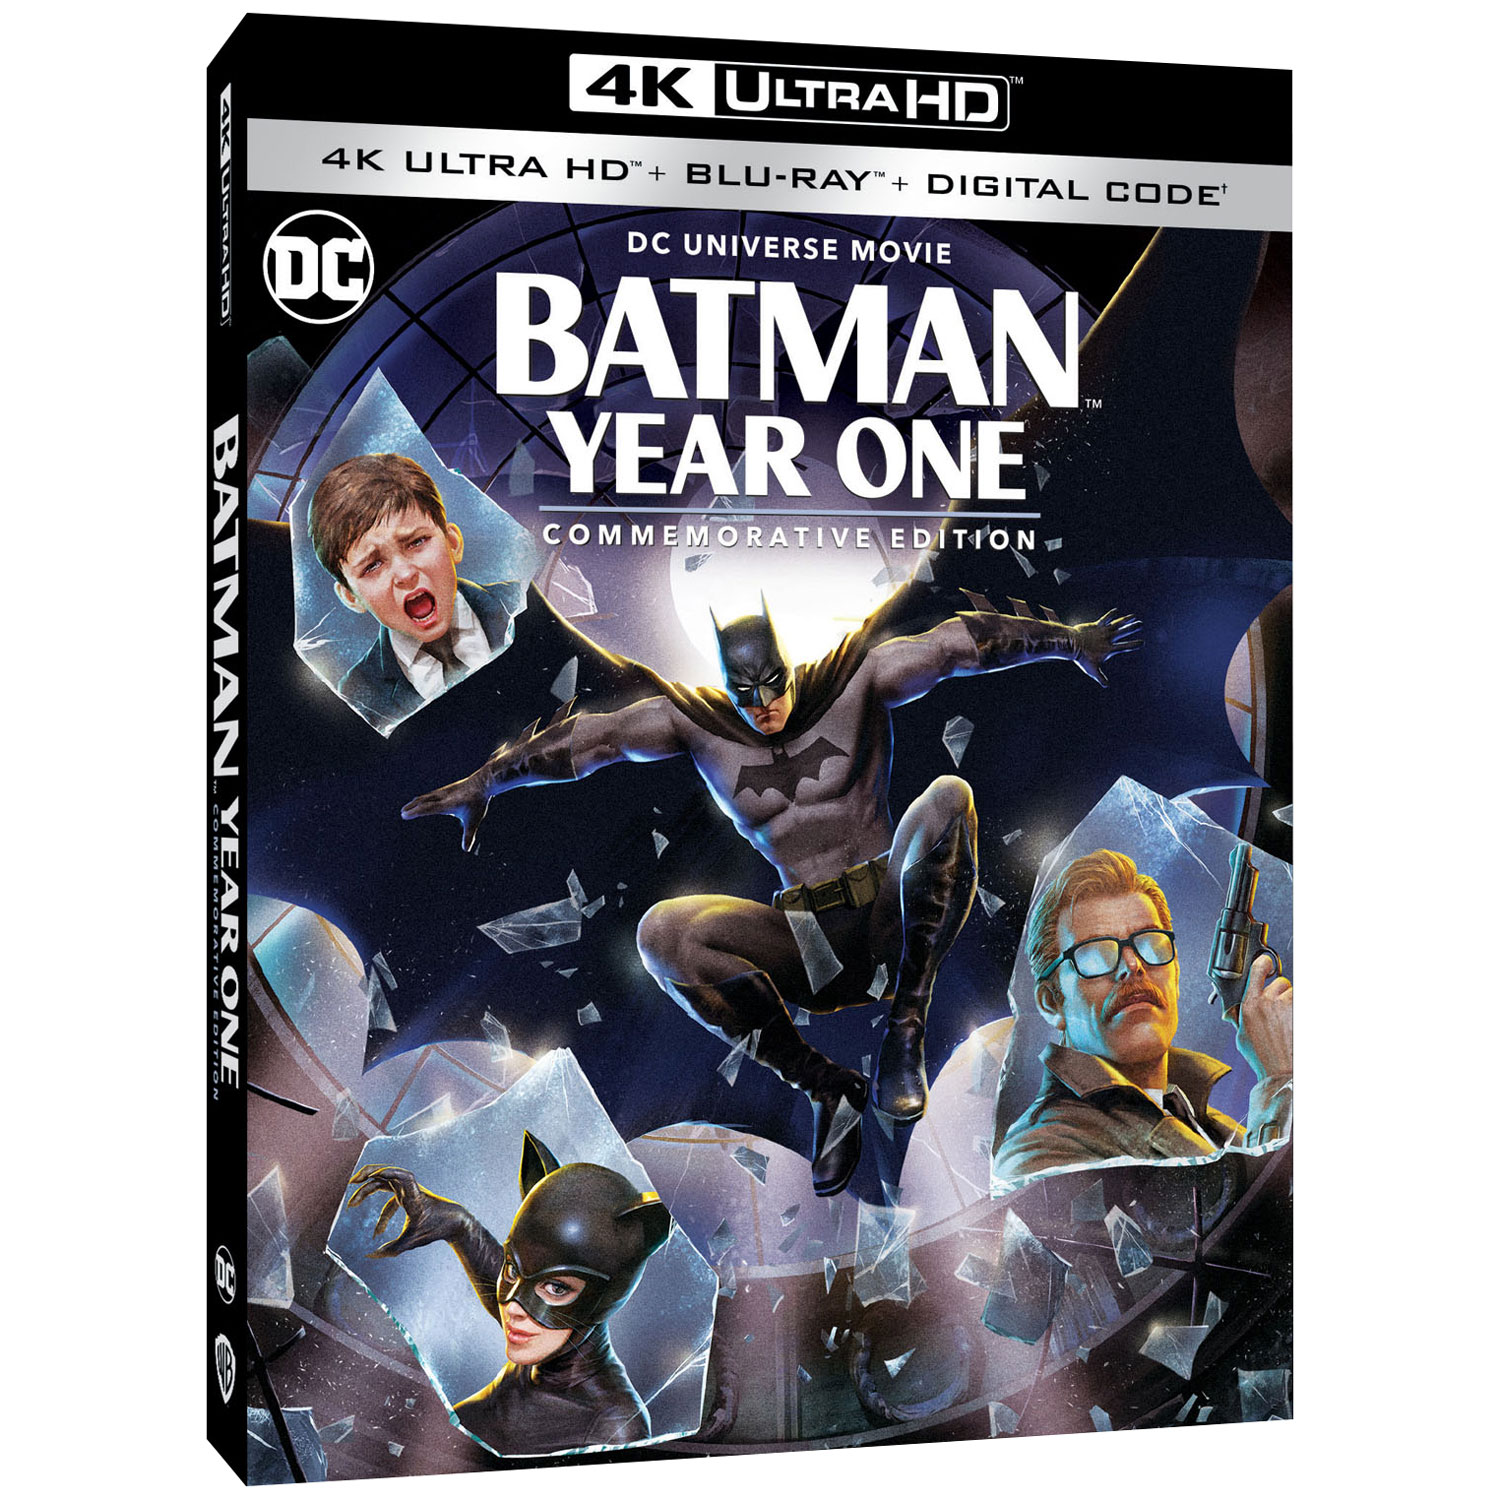 DC Universe Movie: Batman Year One (Commemorative Edition) (4K Ultra HD)